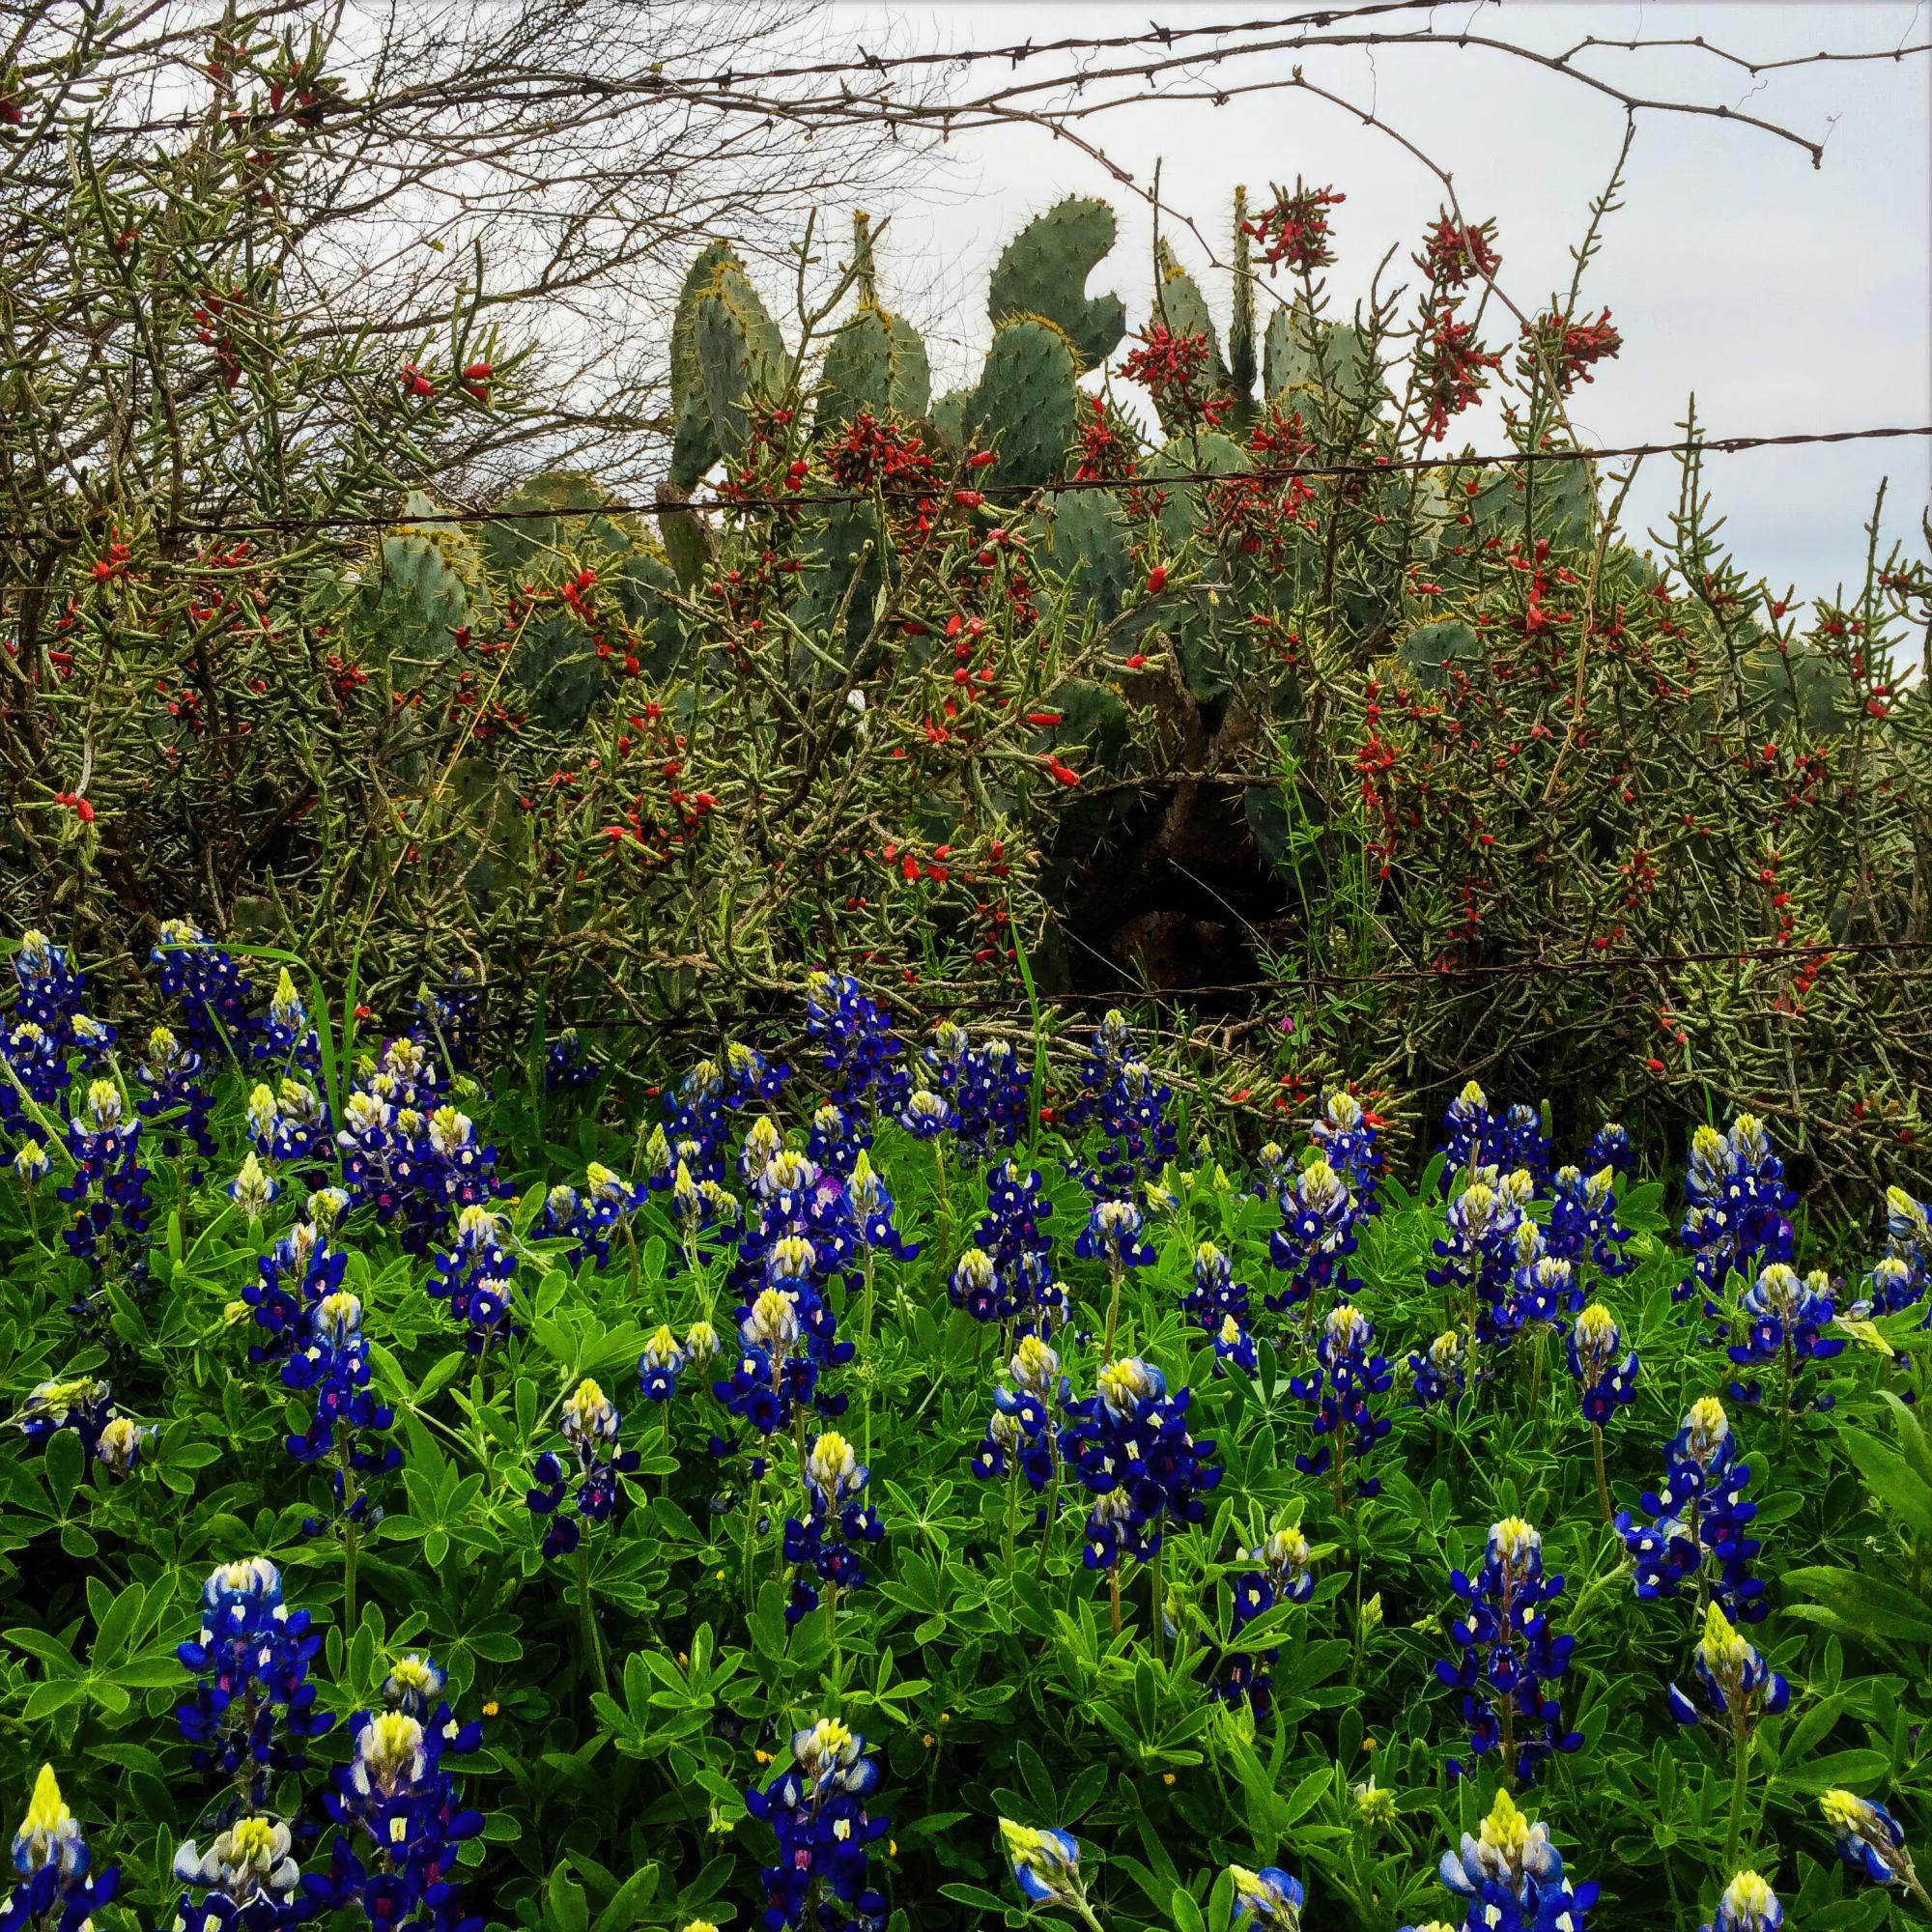 Texas Wildflowers - Central Texas